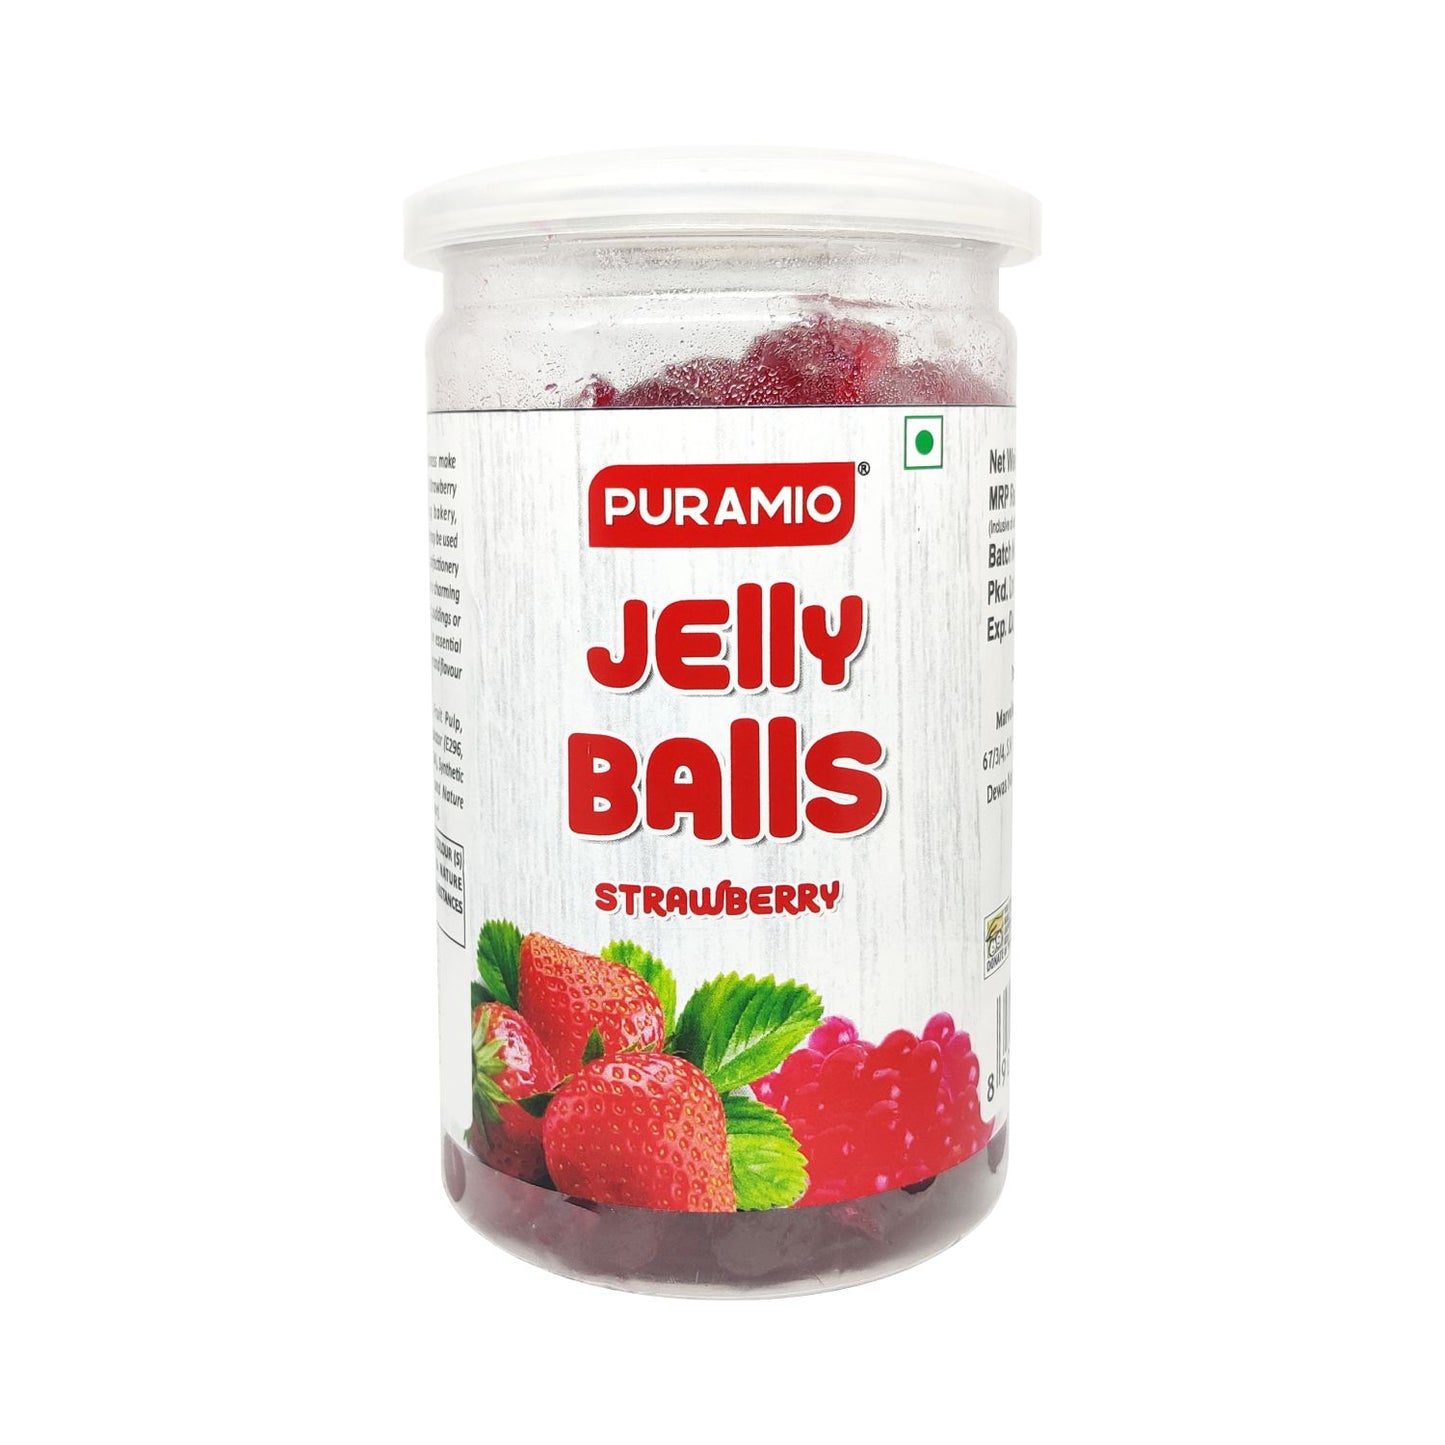 Puramio Combo Pack of Jelly Balls - Strawberry & Orange , 300g Each